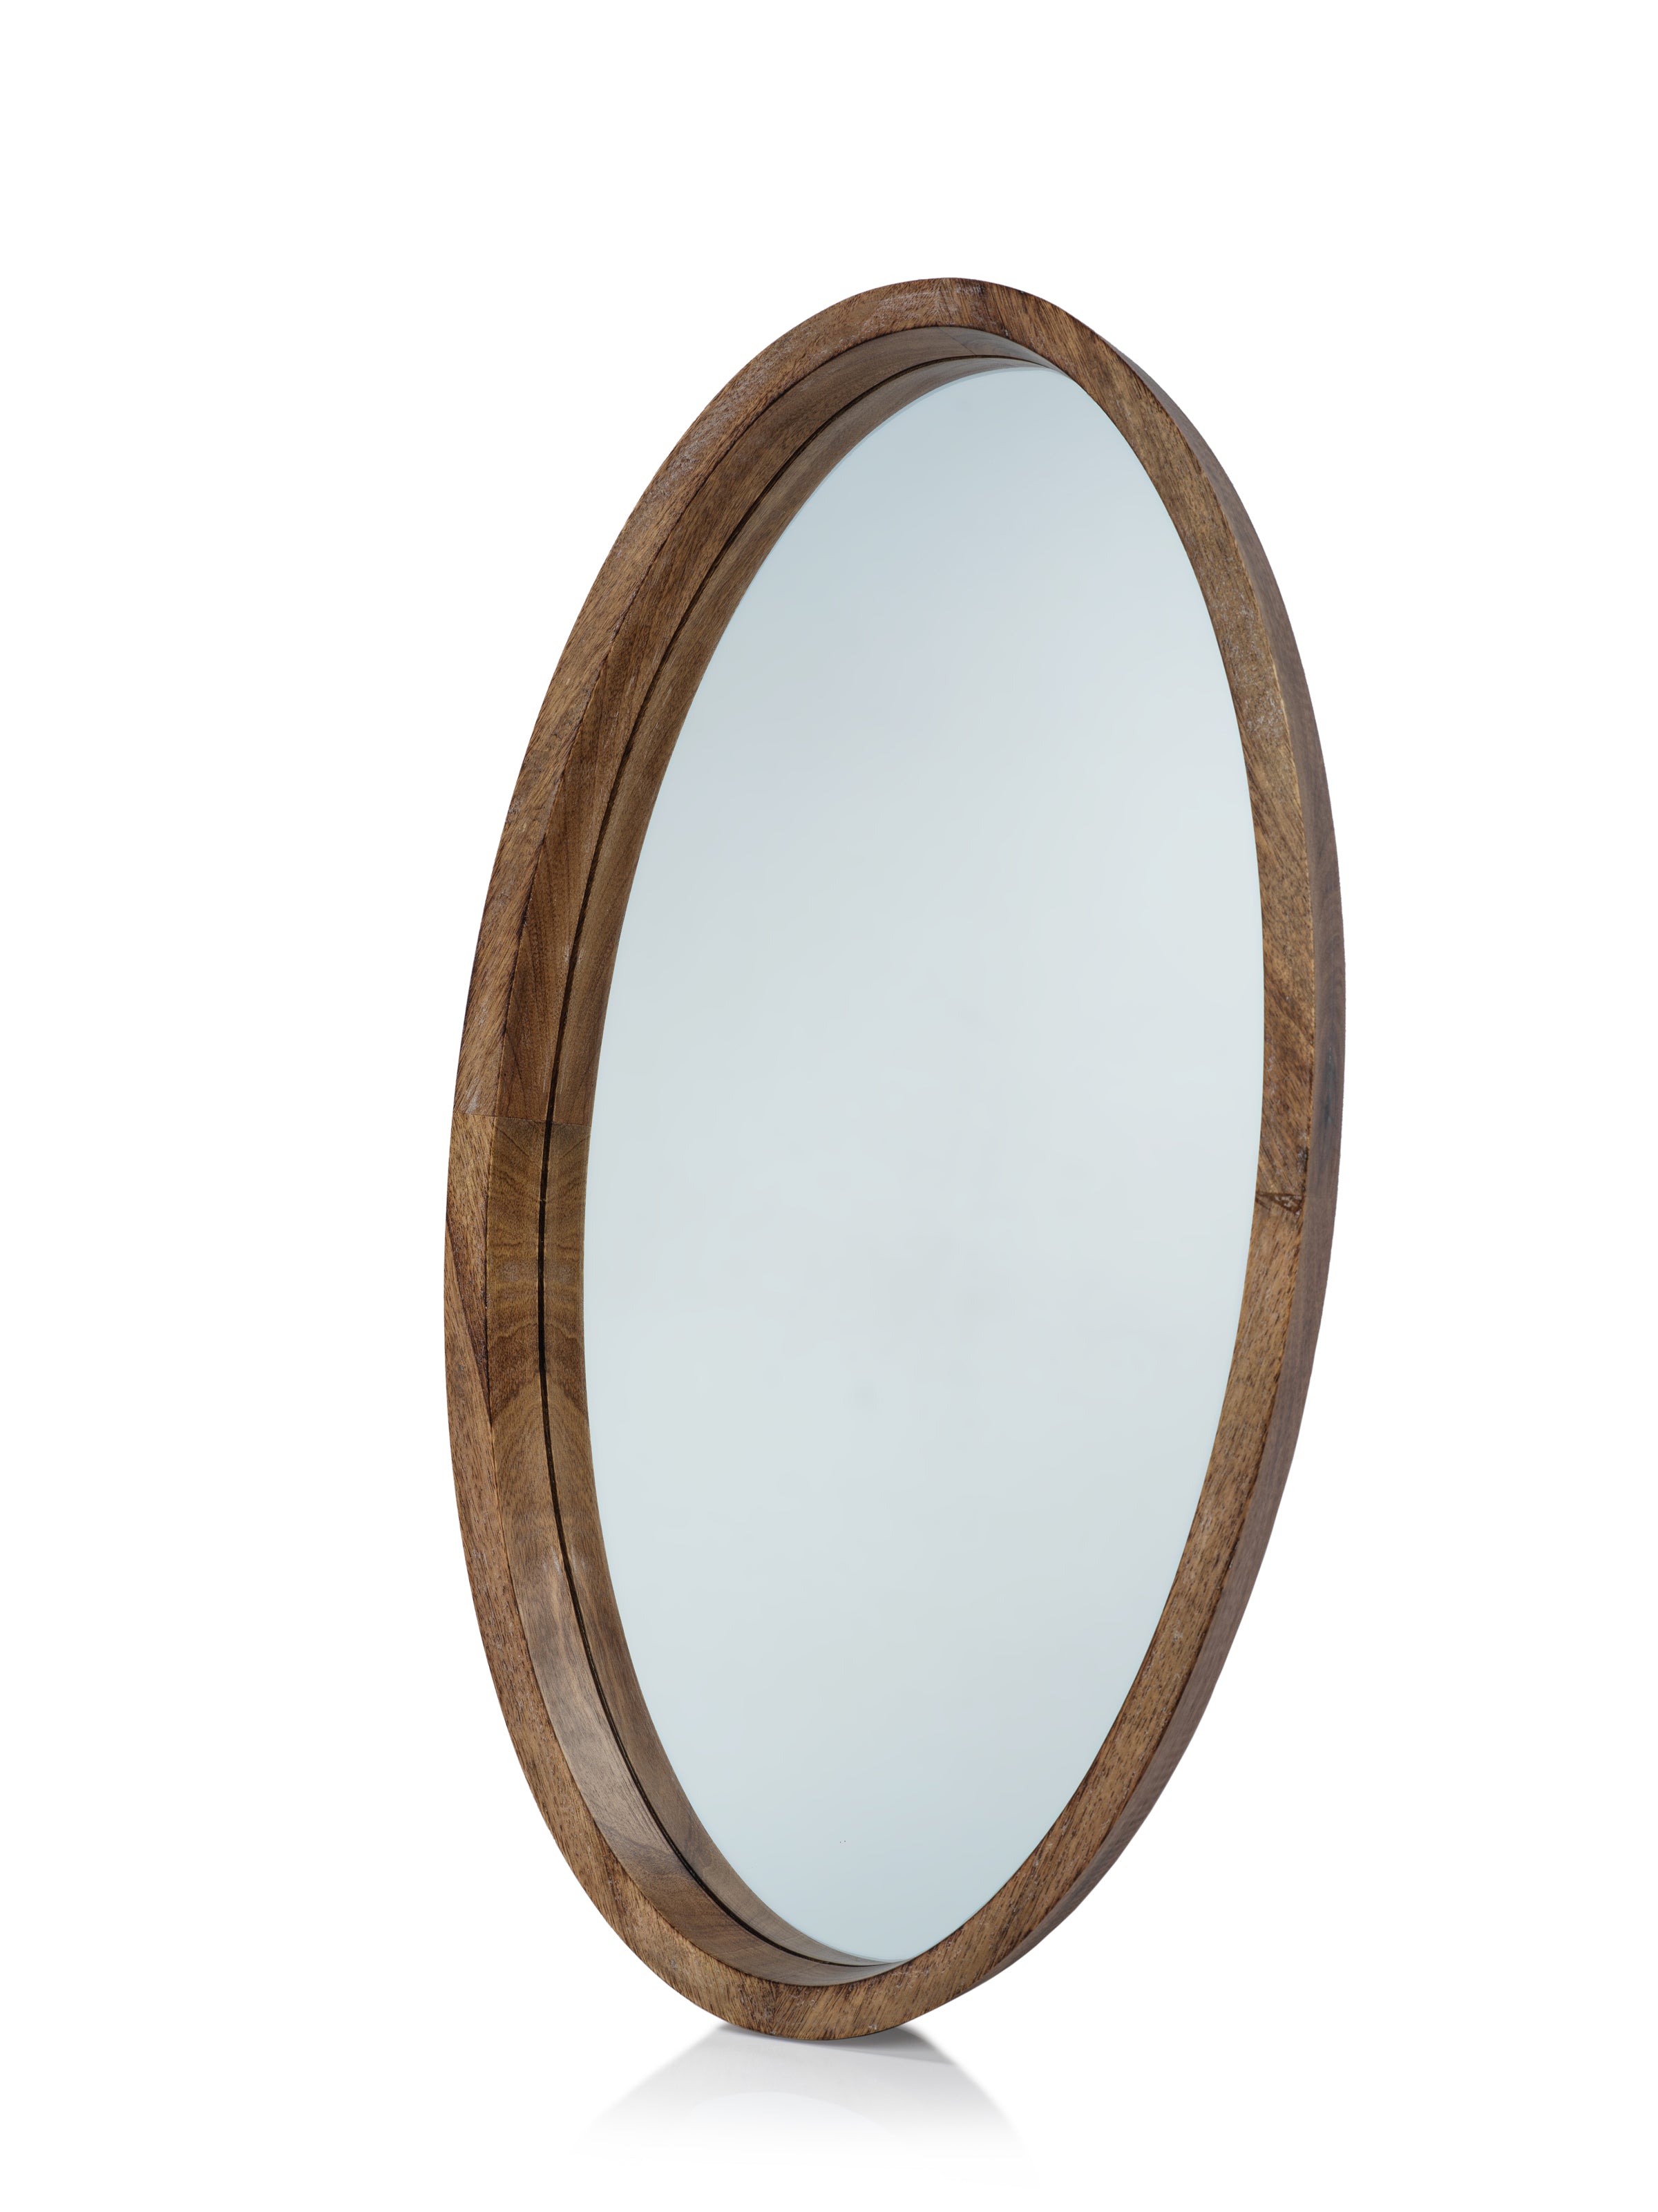 Heritage Mango Wood Oval Mirror - CARLYLE AVENUE